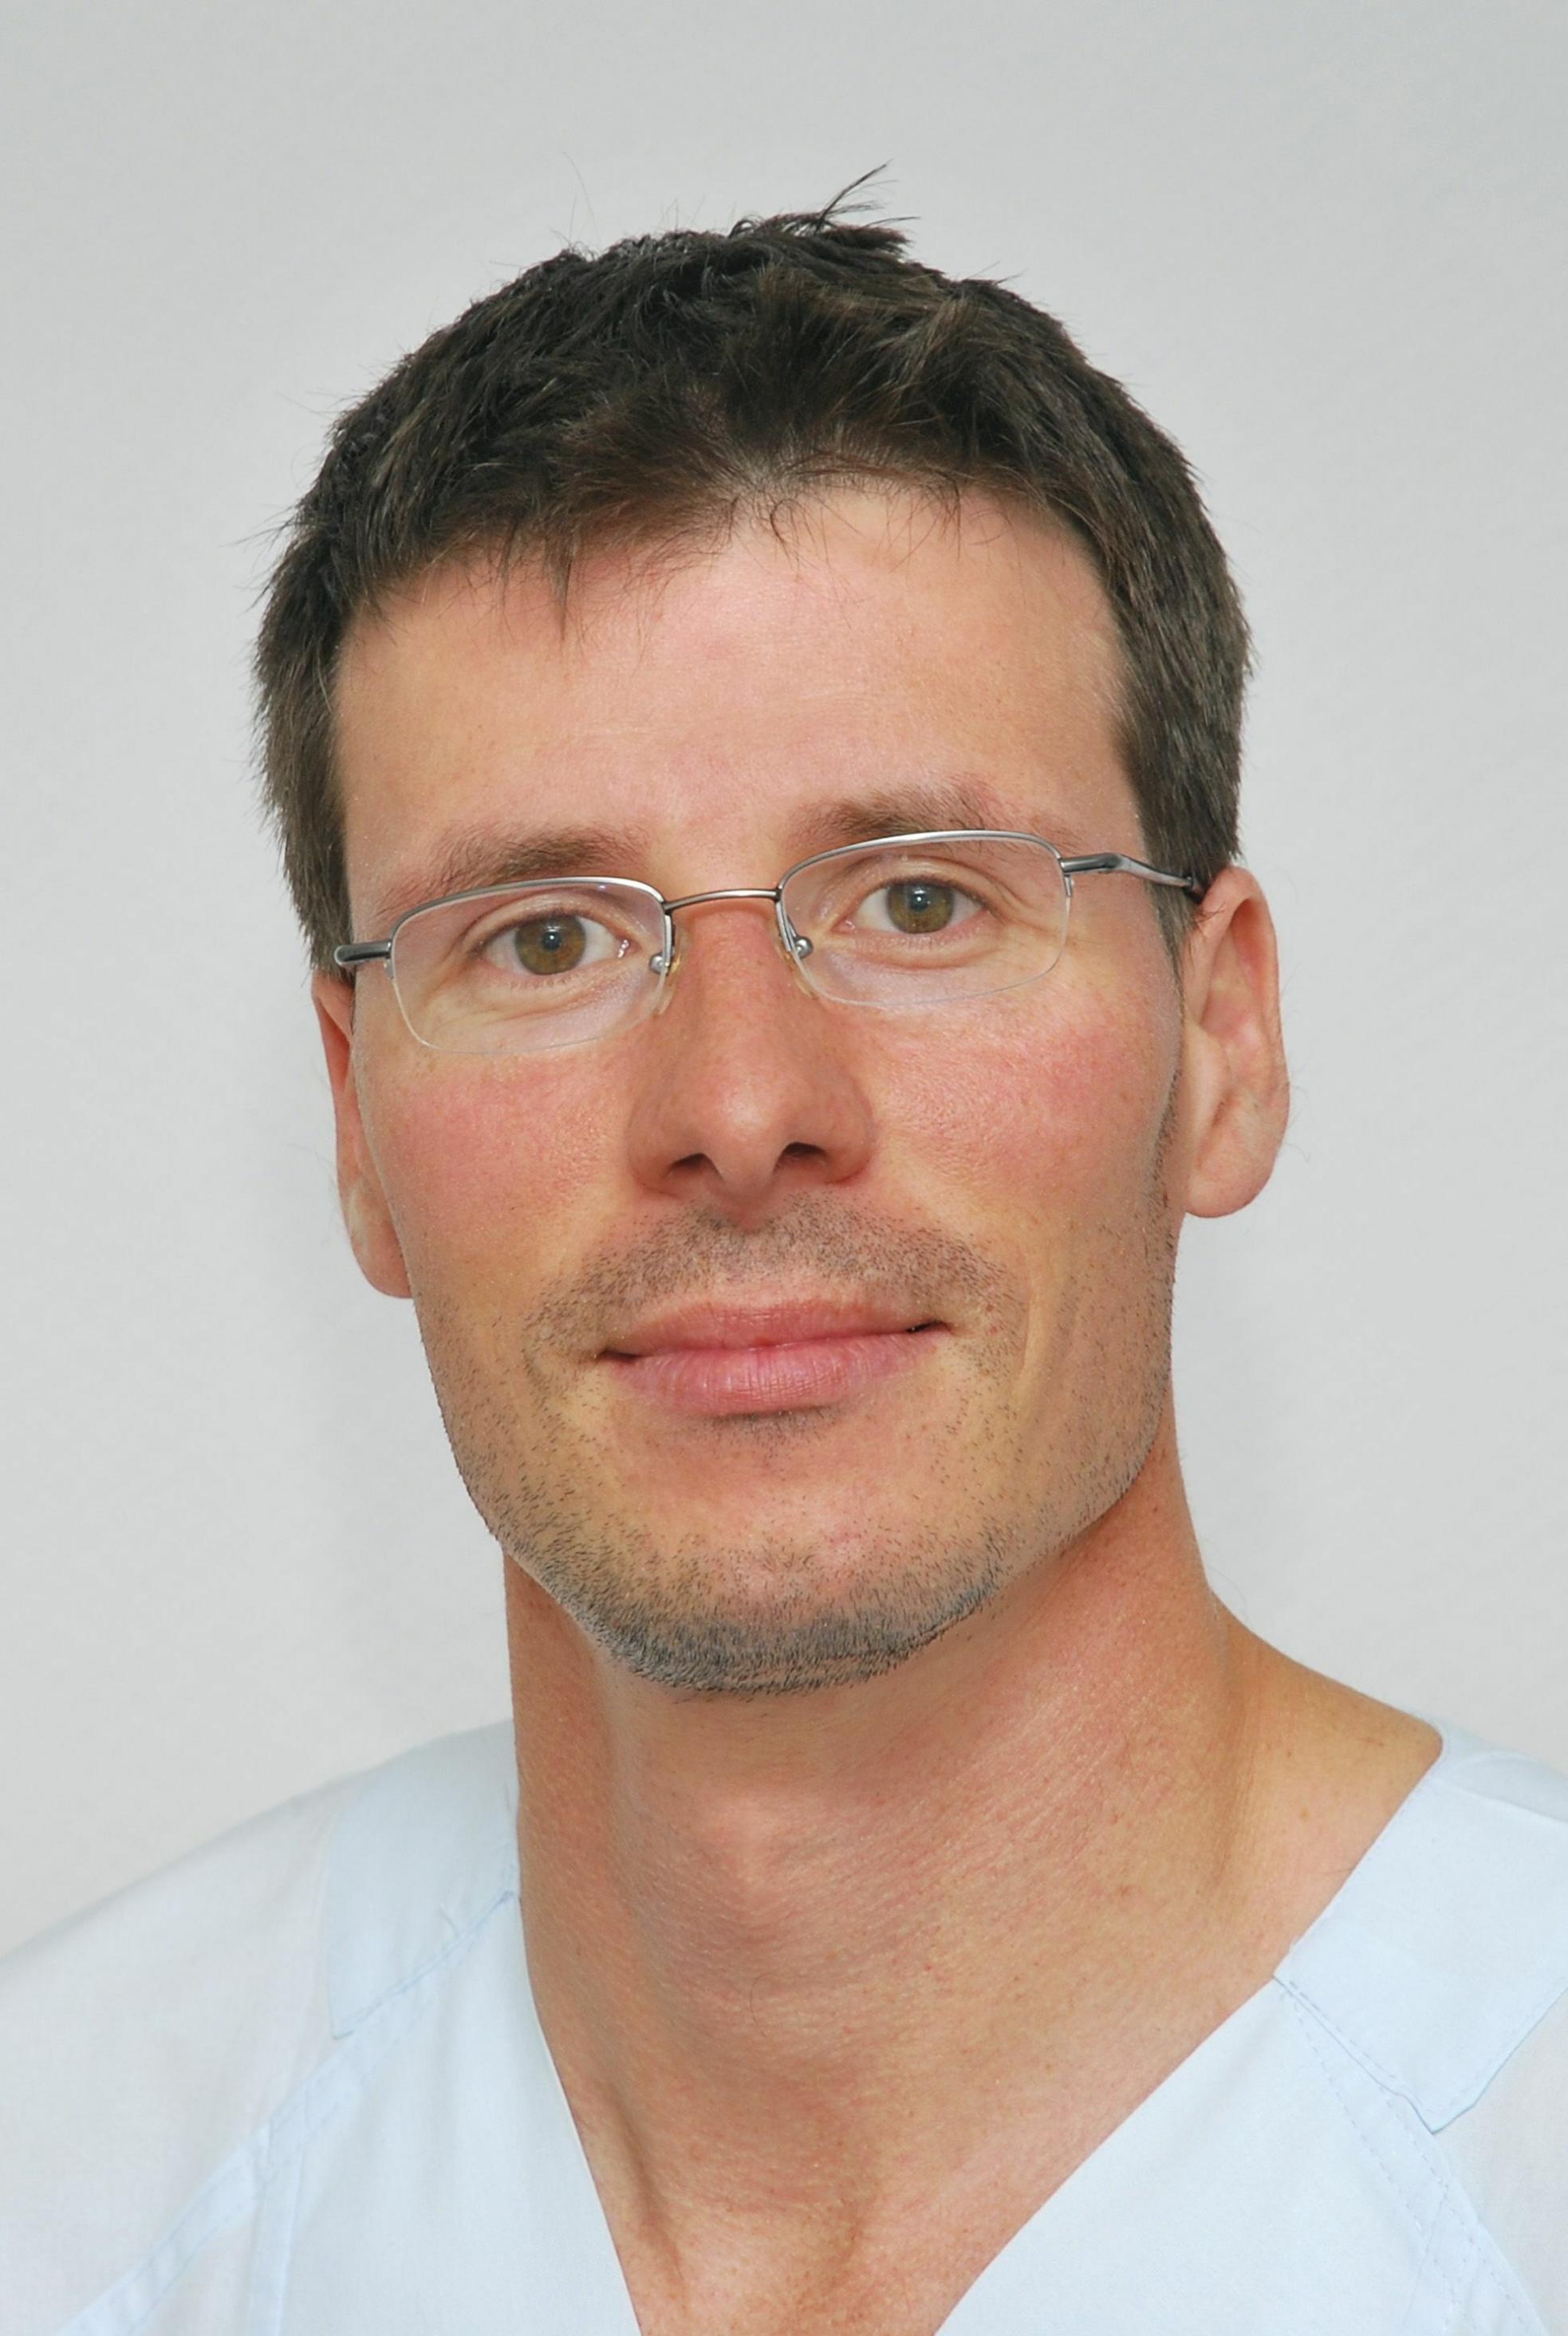 Porträtfoto von Daniel Vilser, ein junger Kinderkardiologe am Universitätsklinikum Jena.